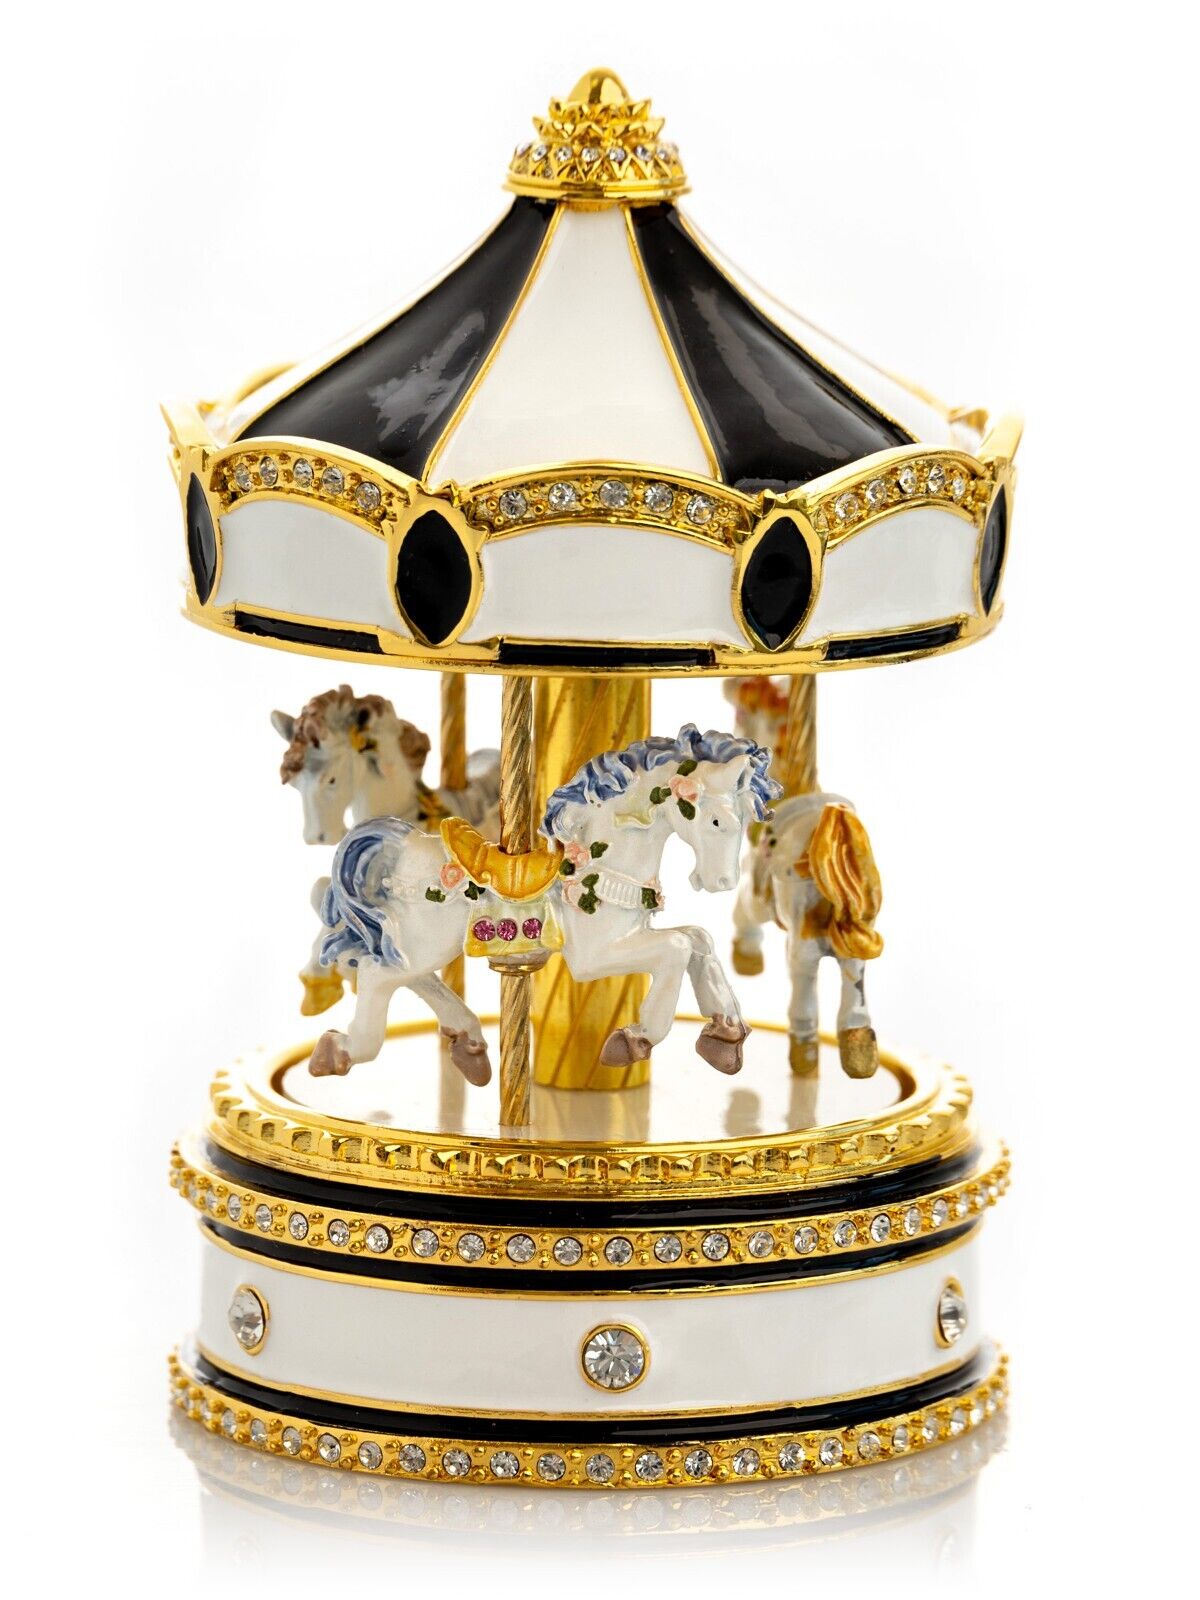 Keren Kopal Black Musical Horses Carousel Decorated with Austrian Crystals